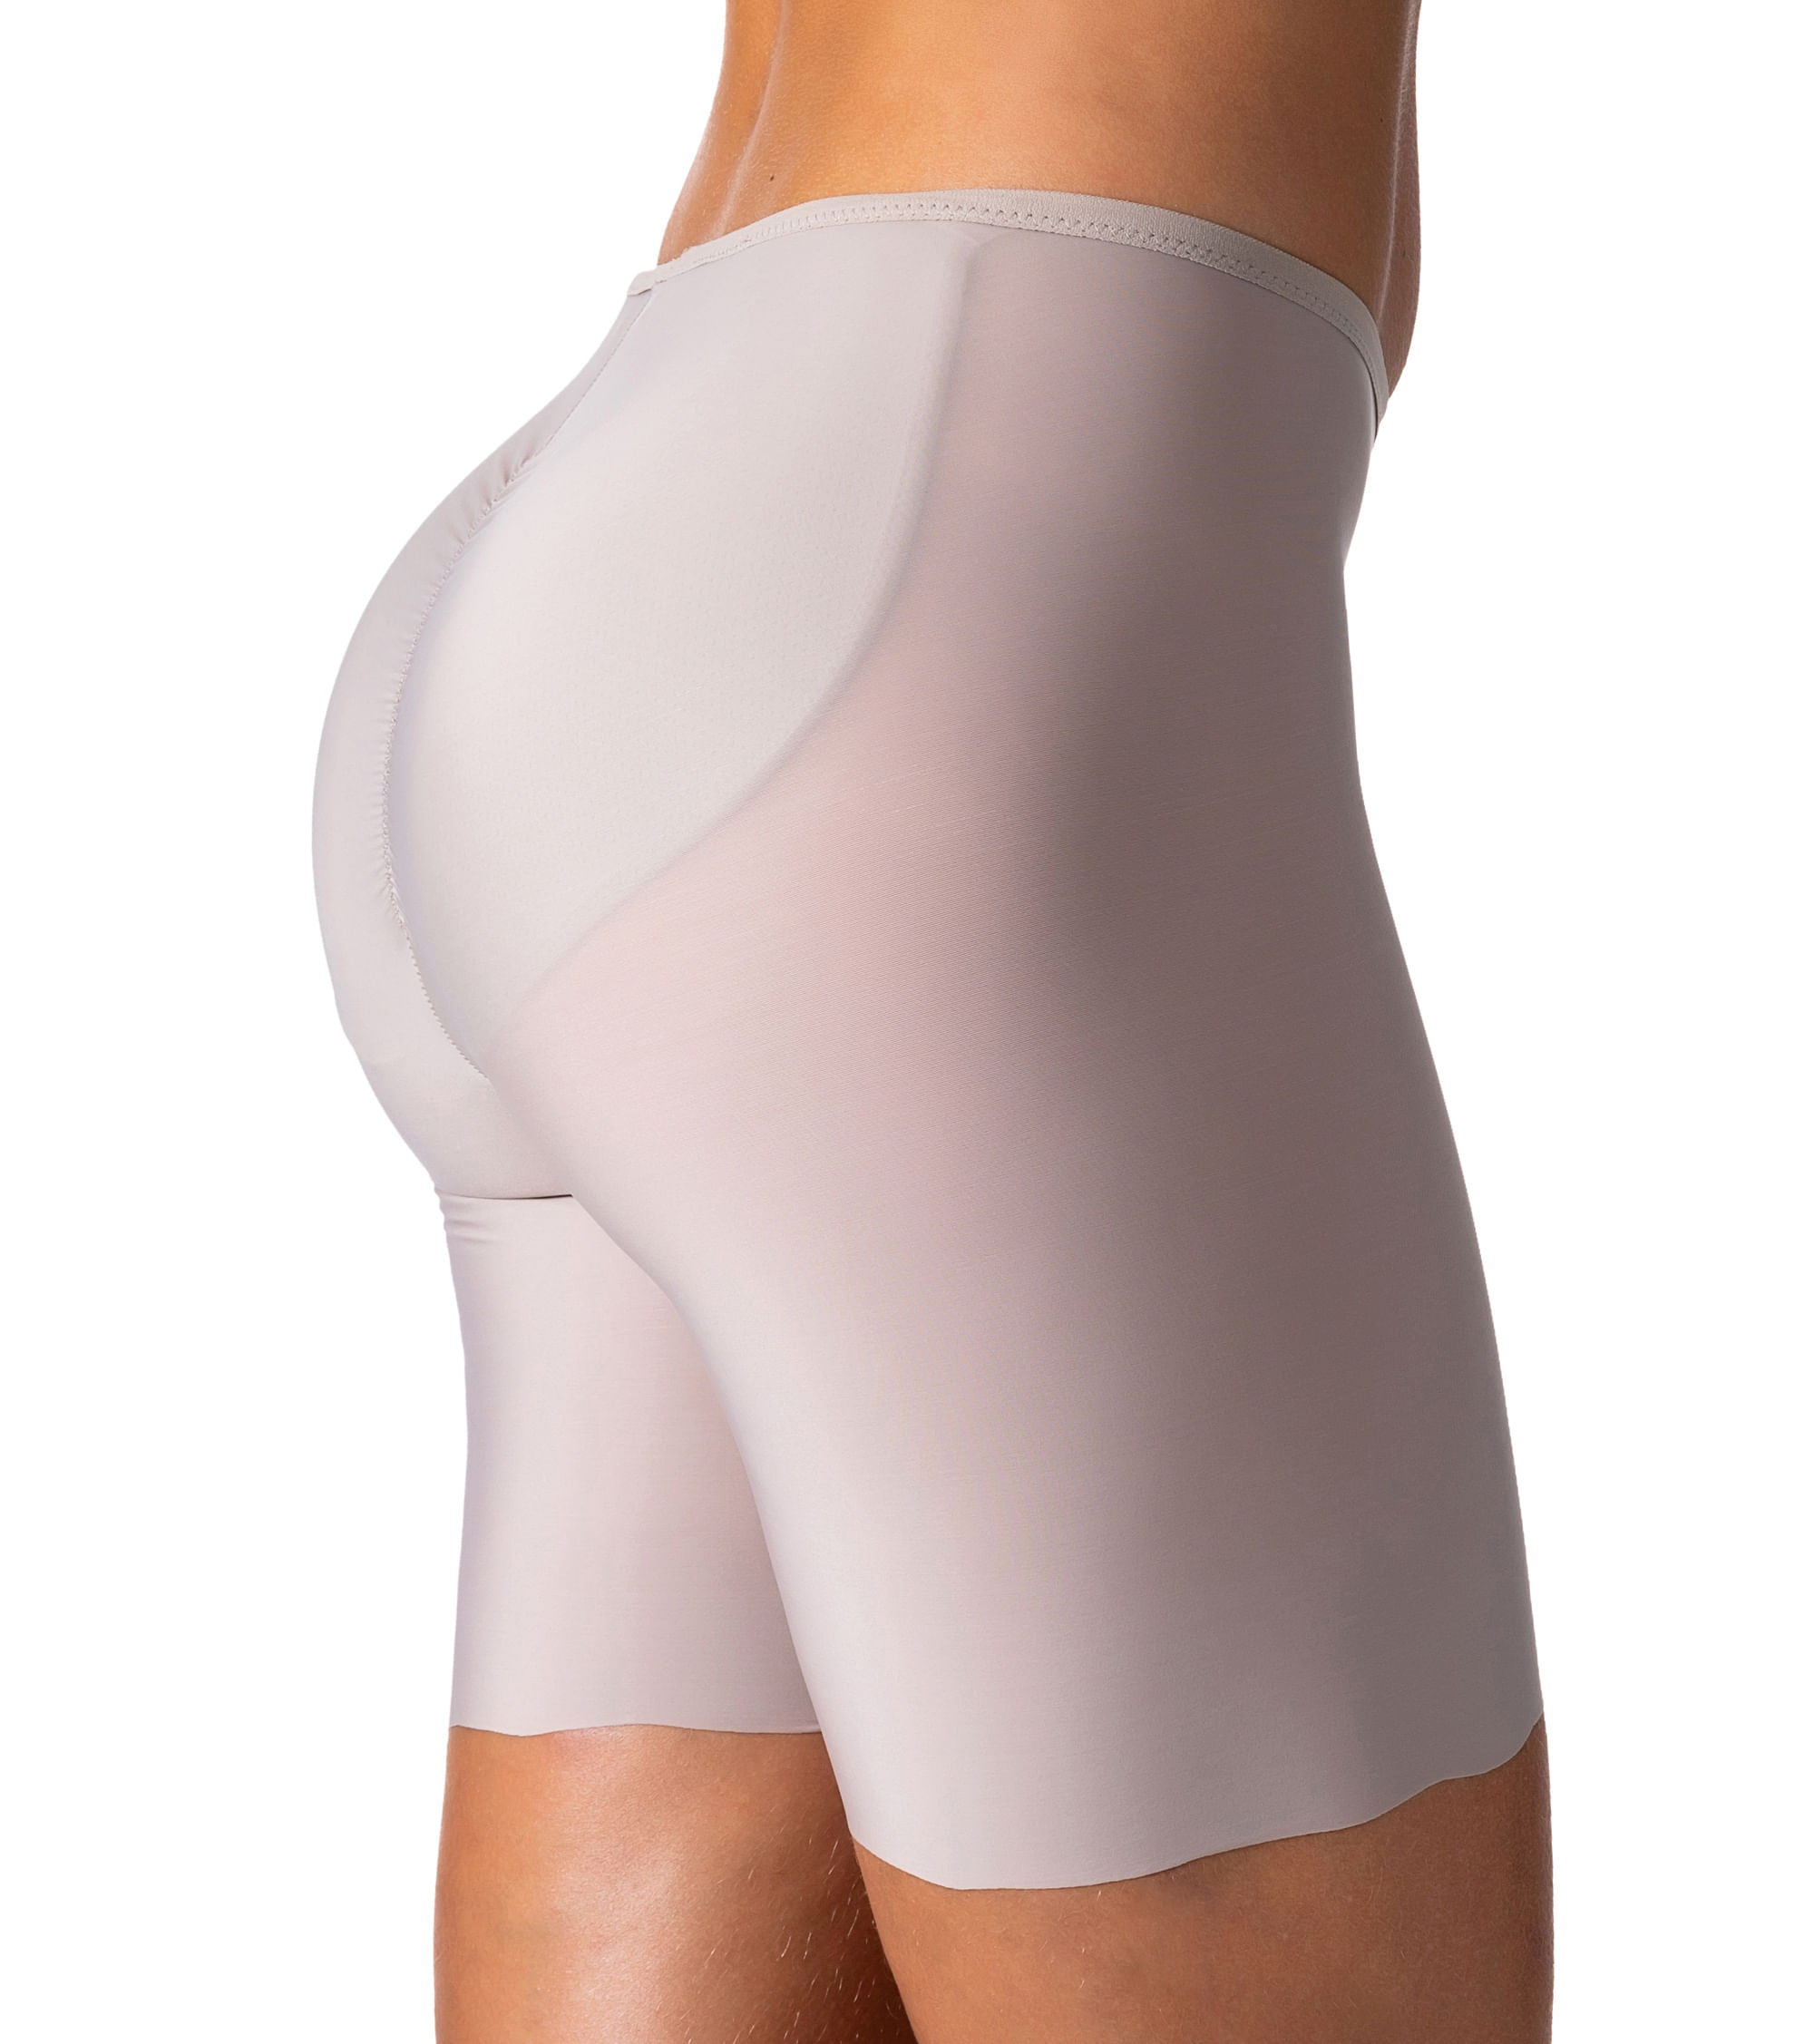 The invisible® LIZ semi Body Aesthetic Shorts